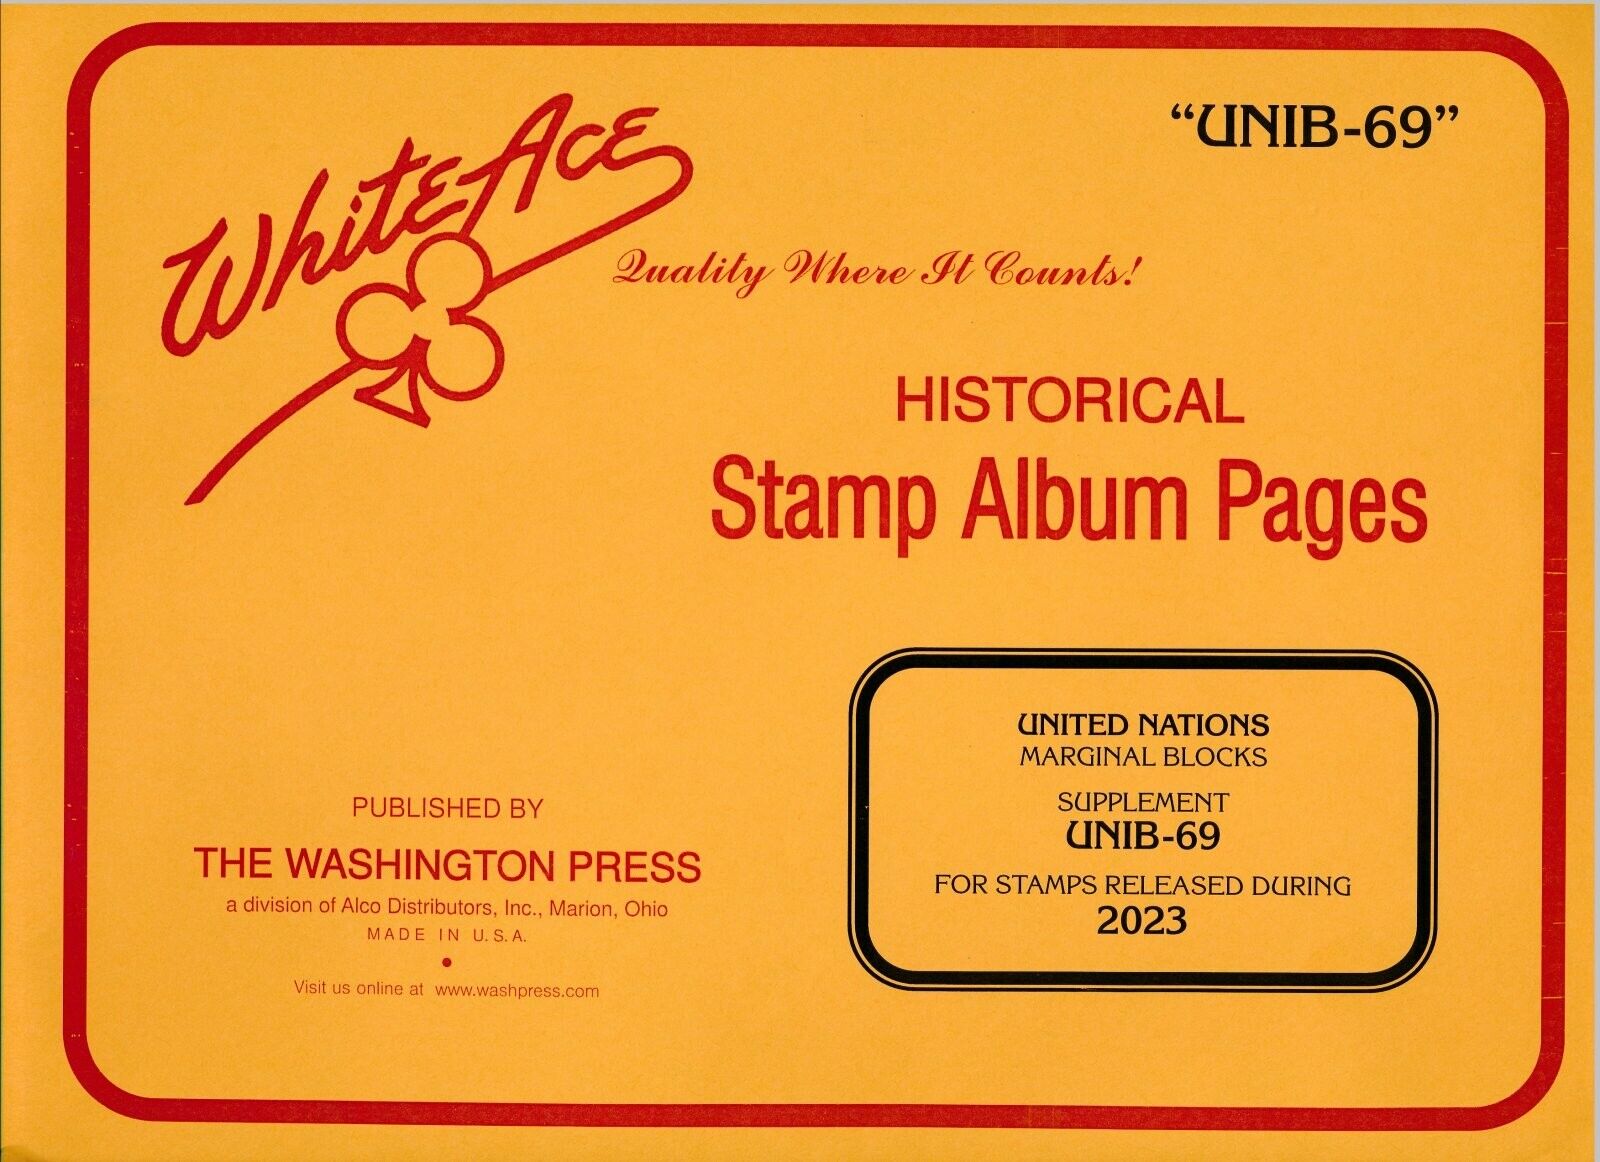 WHITE ACE 2023 United Nations Inscription Blocks Stamp Album Supplement UNIB-69 WHITE ACE